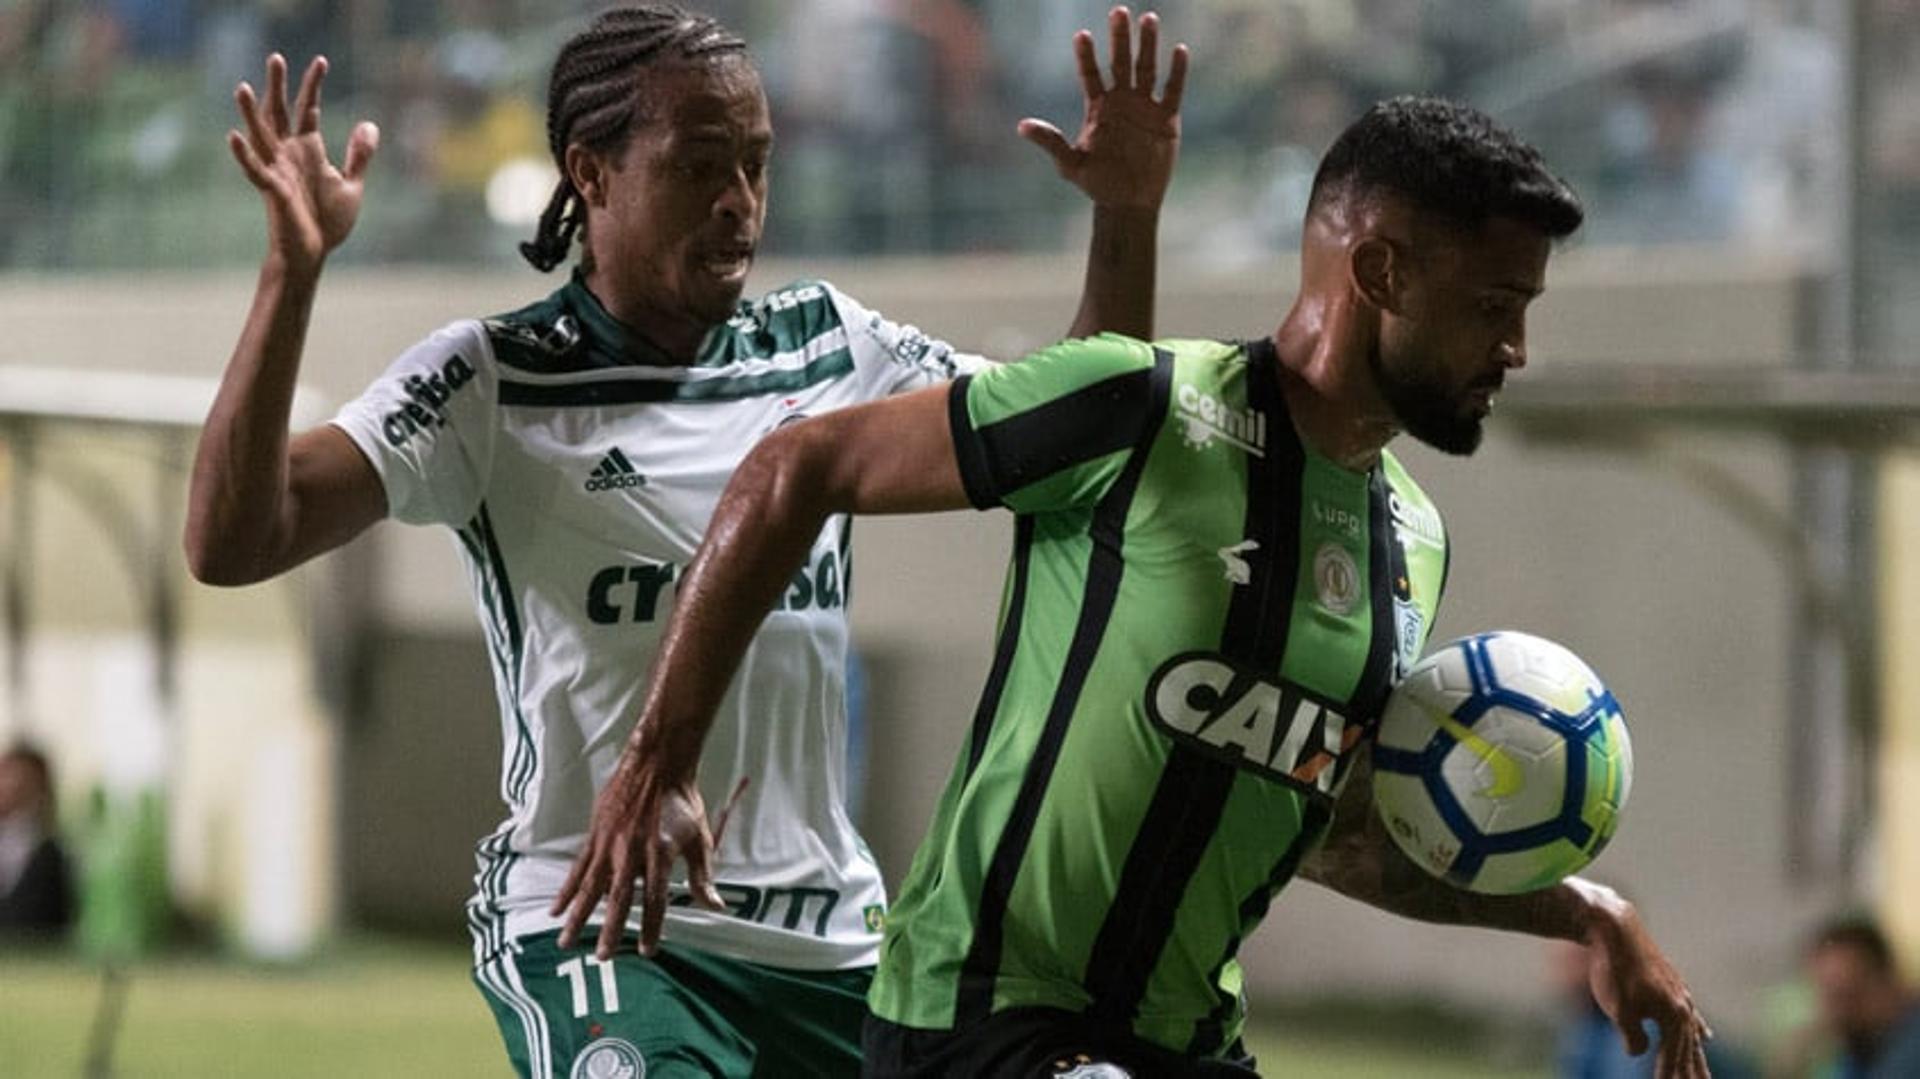 Último encontro: América-MG 1 x 2 Palmeiras - 9/5/2018